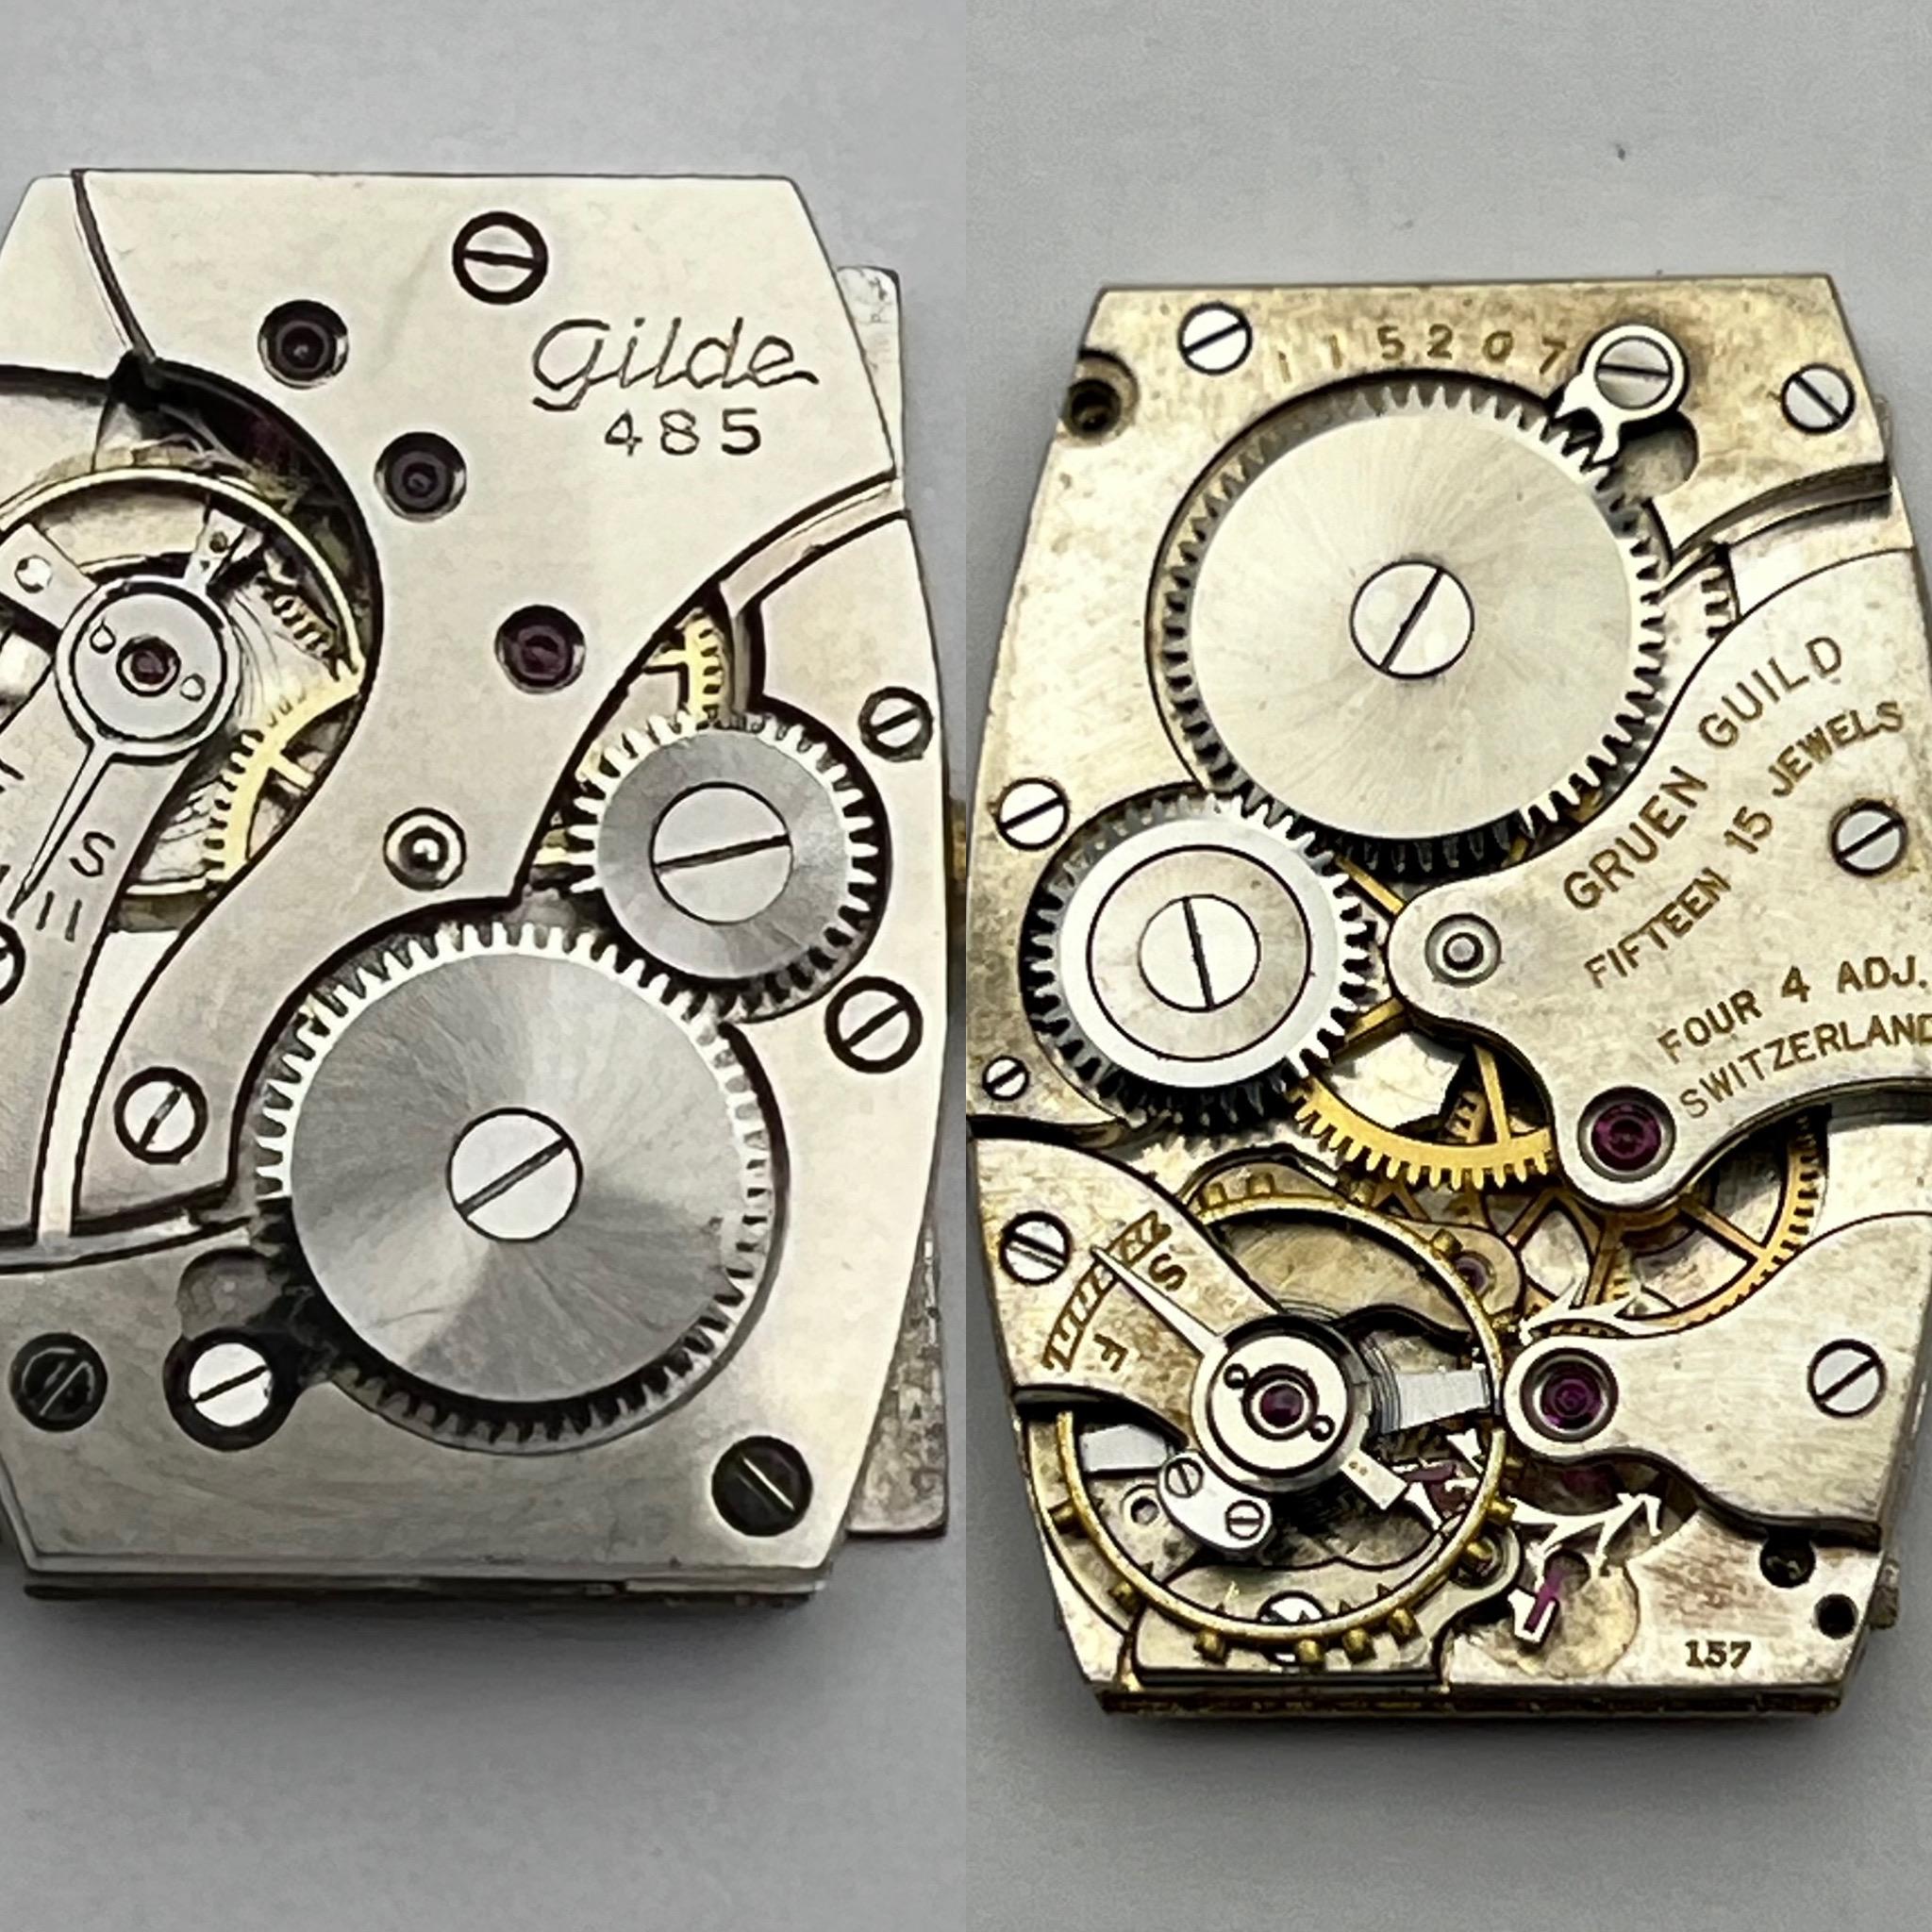 European Gruen / Gilde Quadron #485, Rare Stateside Find. Art Deco 15J Caliber  For Sale 9